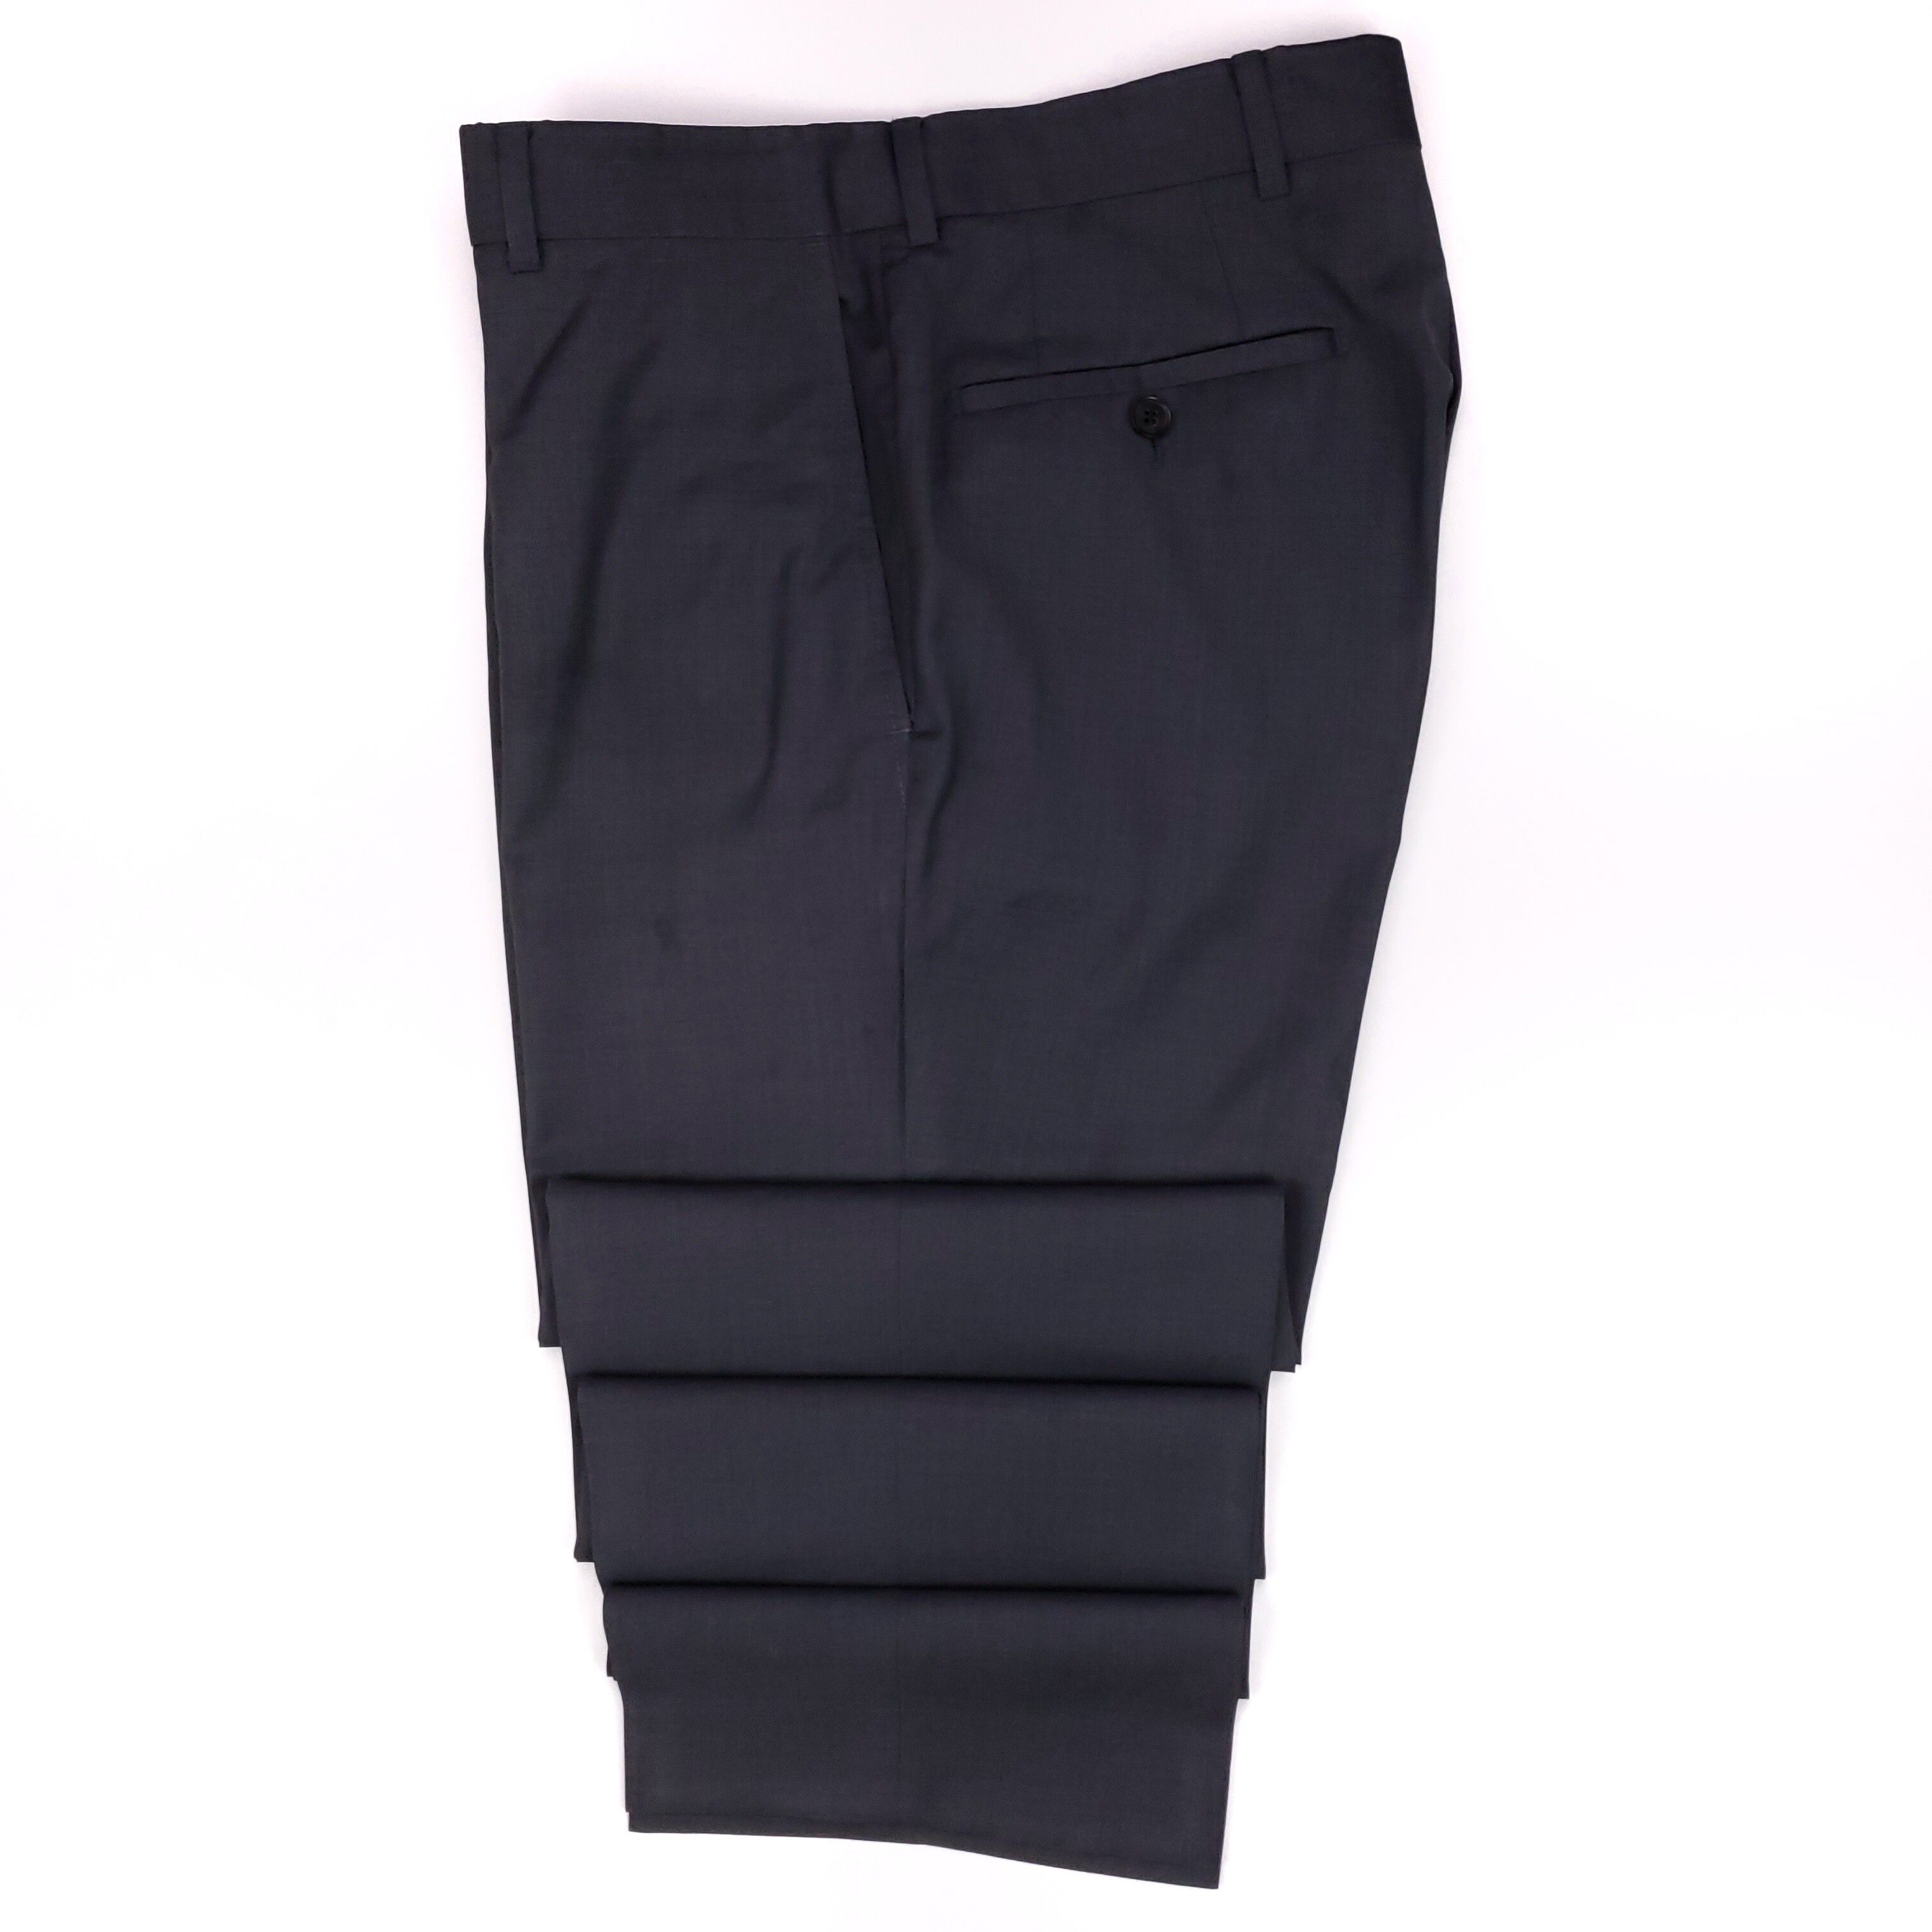 Hugo Boss Hugo Boss James Brown Pants 32x30 Gray Charcoal Wool Cashme Size US 32 / EU 48 - 1 Preview